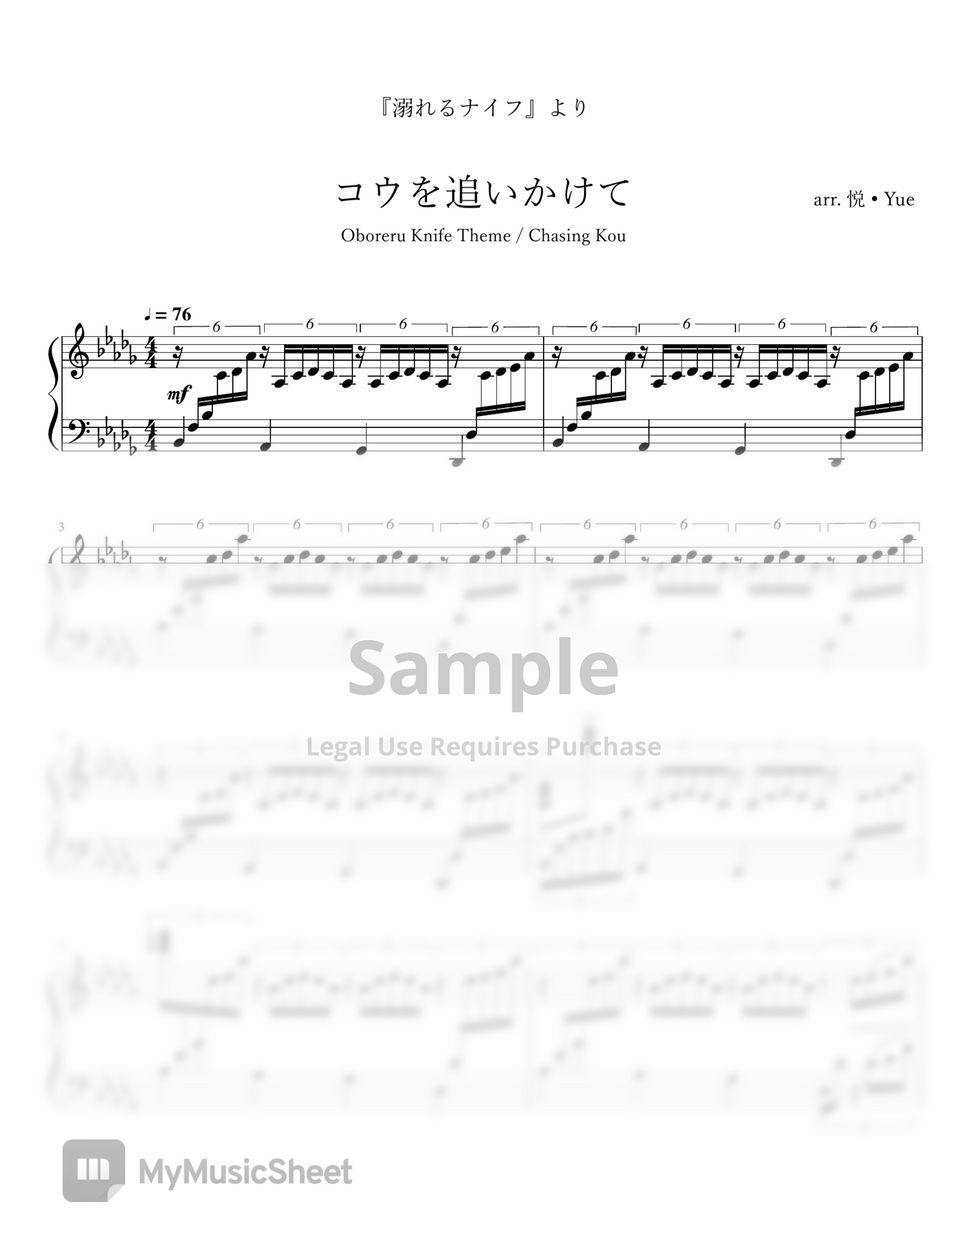 Oboreru Knife - 溺れるナイフ Drowning Love OST『コウを追いかけて / Chasing Kou』ピアノ (Arrangement) by 悦 • Yue